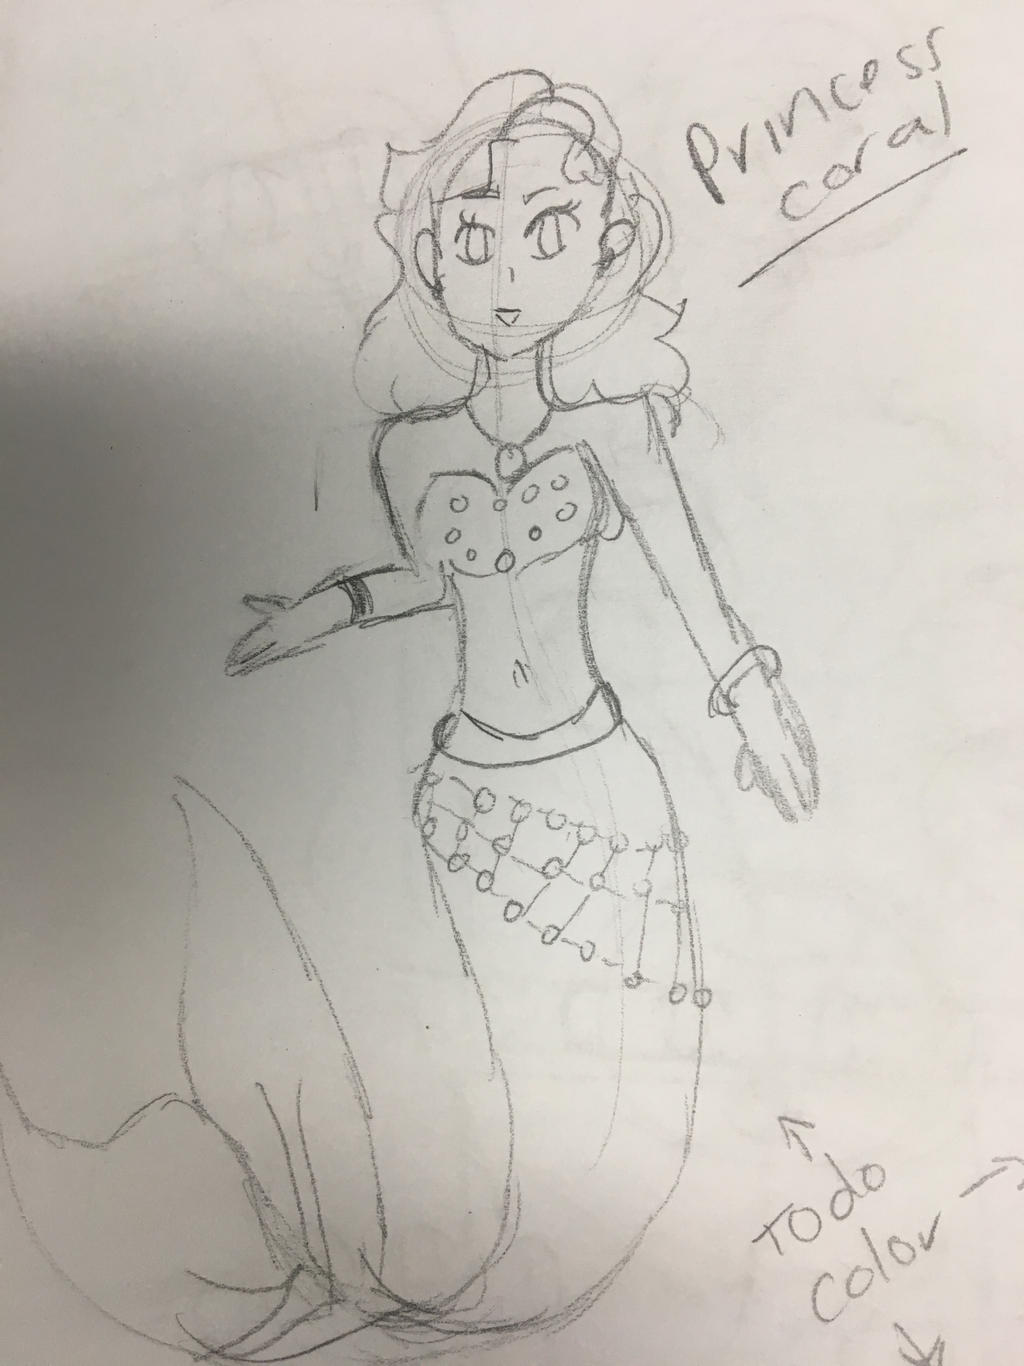 A Practice mermaid I liked